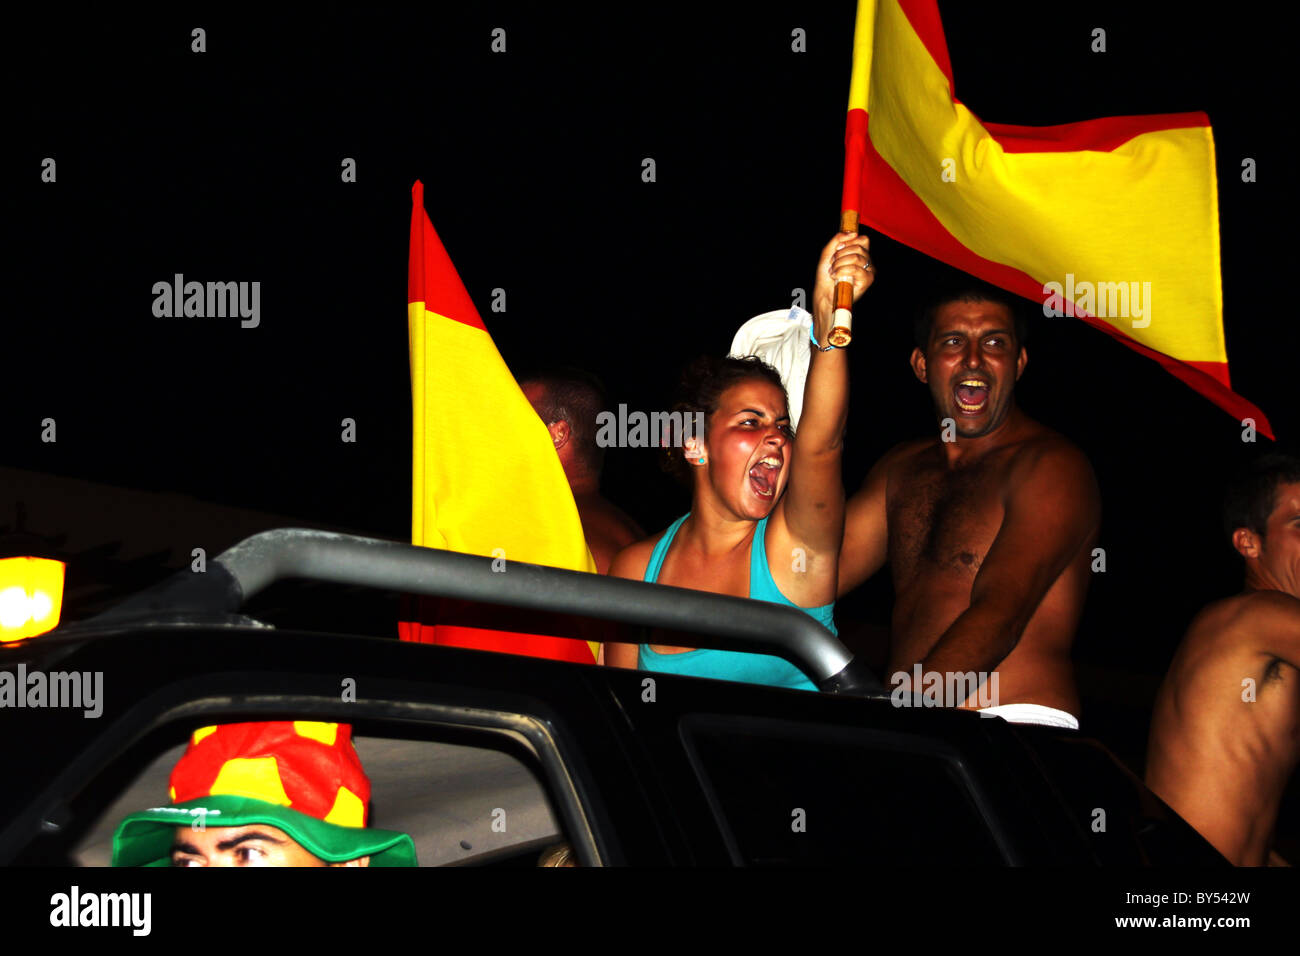 Spanish football fans celebrating Spain winning the world cup 2010 Stock Photo